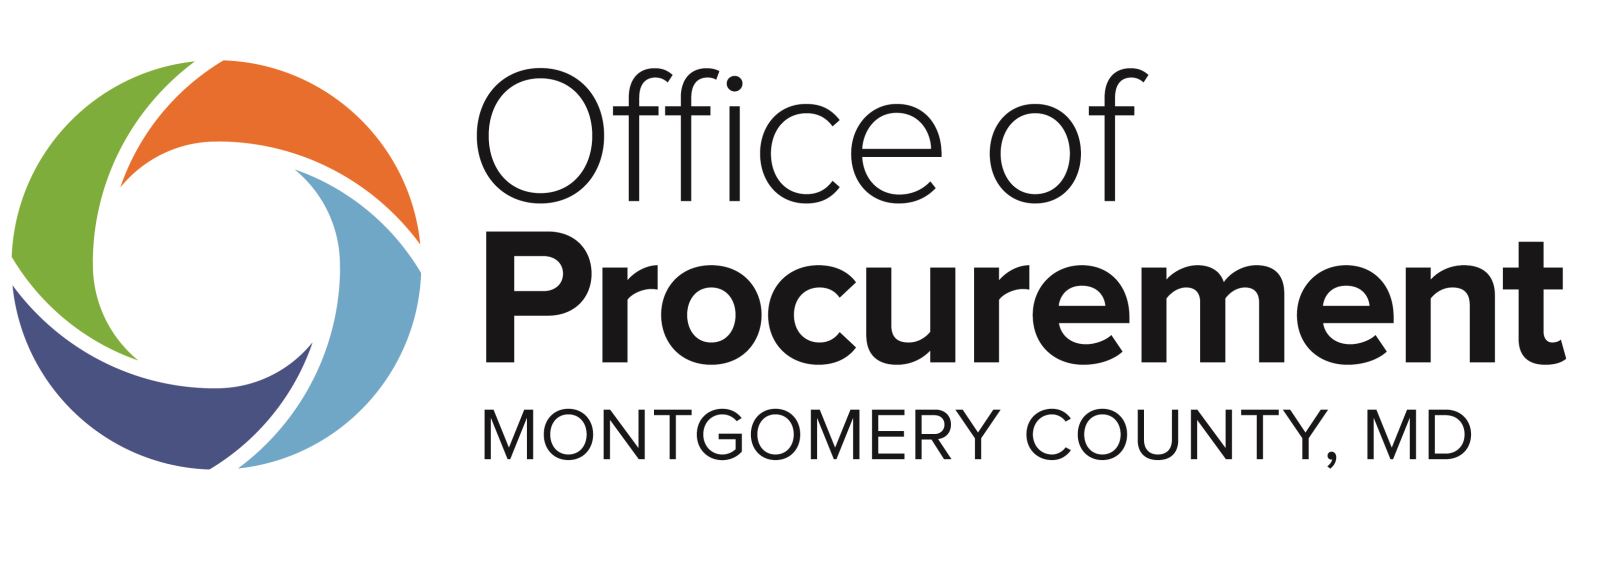 Montgomery Count Office of Procurement